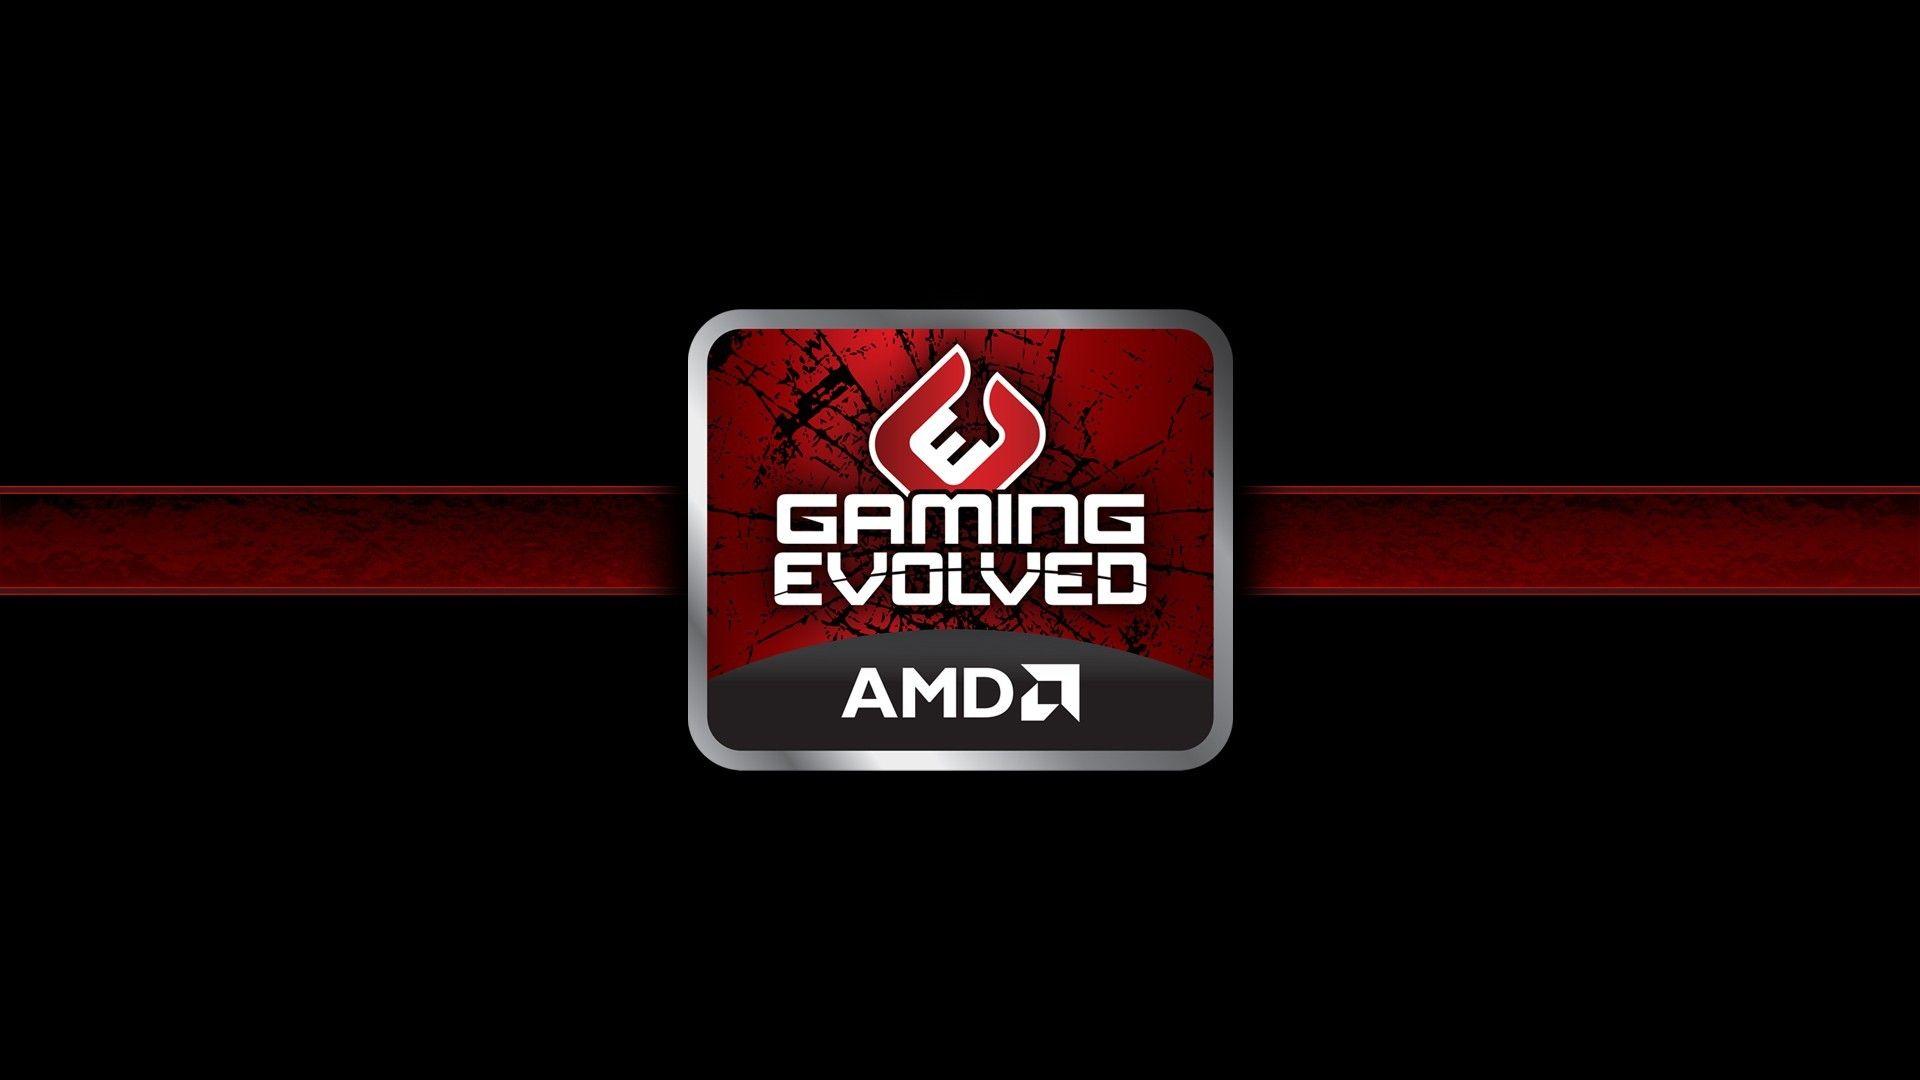 AMD 4K Logo - Amd 4K Wallpaper